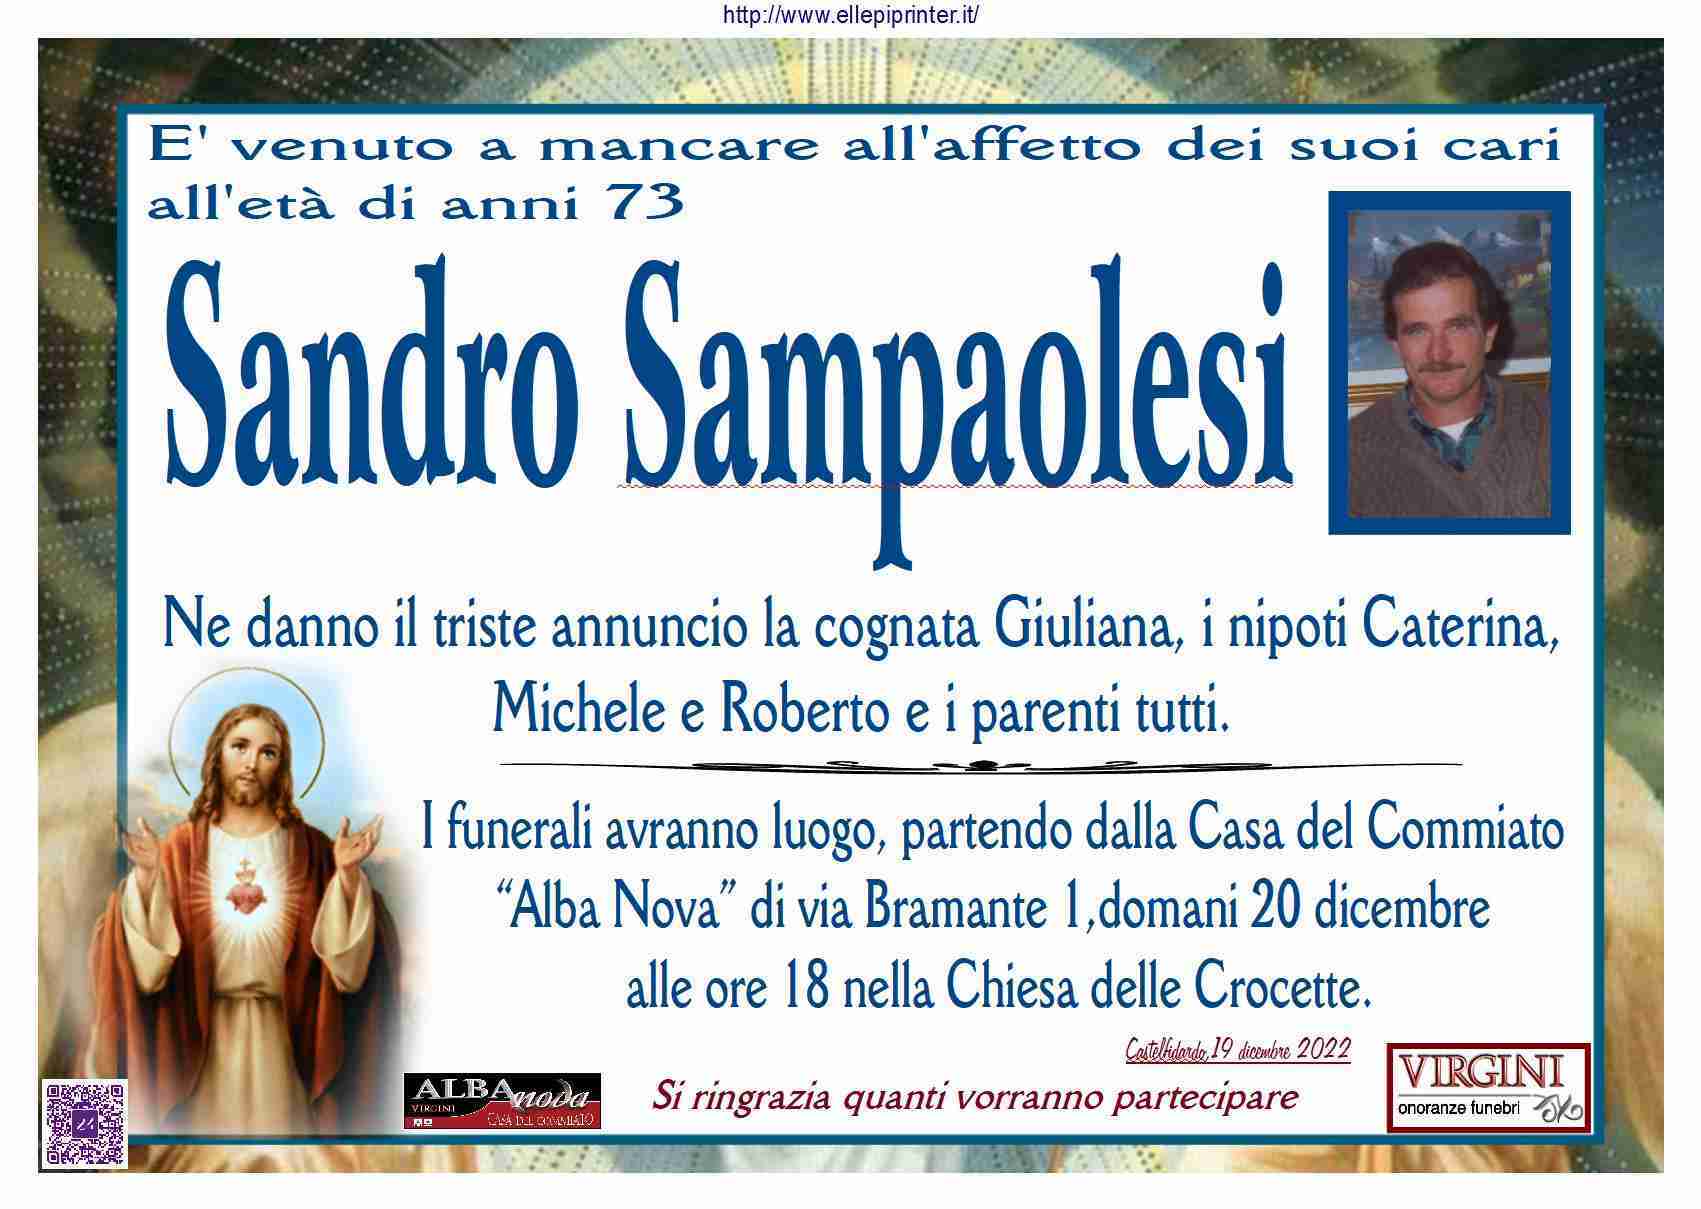 Sandro Sampaolesi